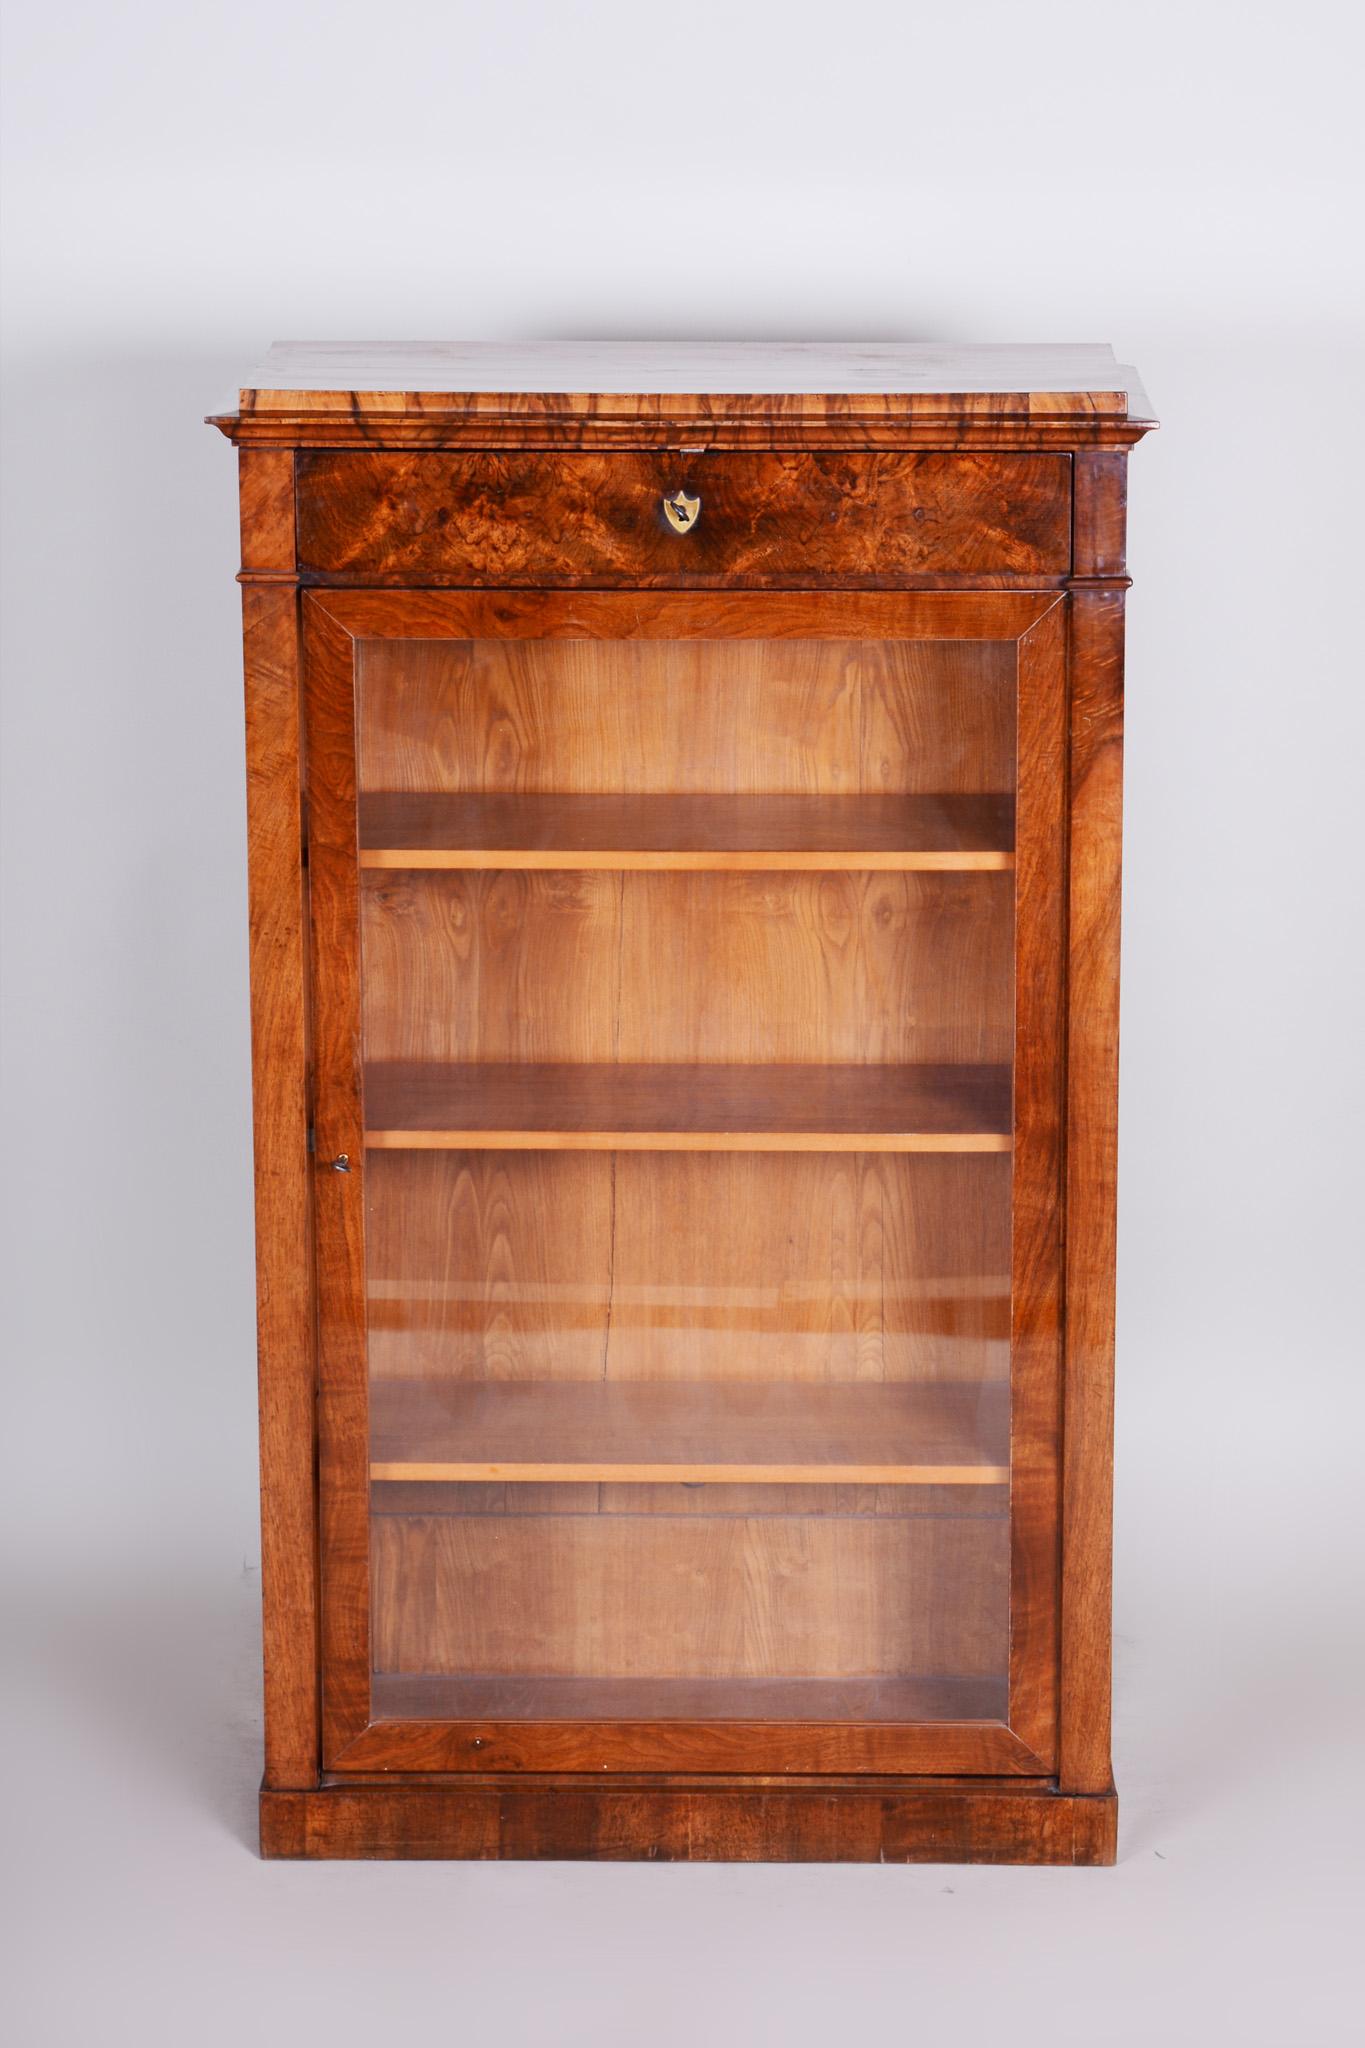 19th century Biedermeier display bookcase
Completely restored to shellac polish.
Material: Walnut
Period: 1830 - 1839
Source: Bohemia - Czechia.